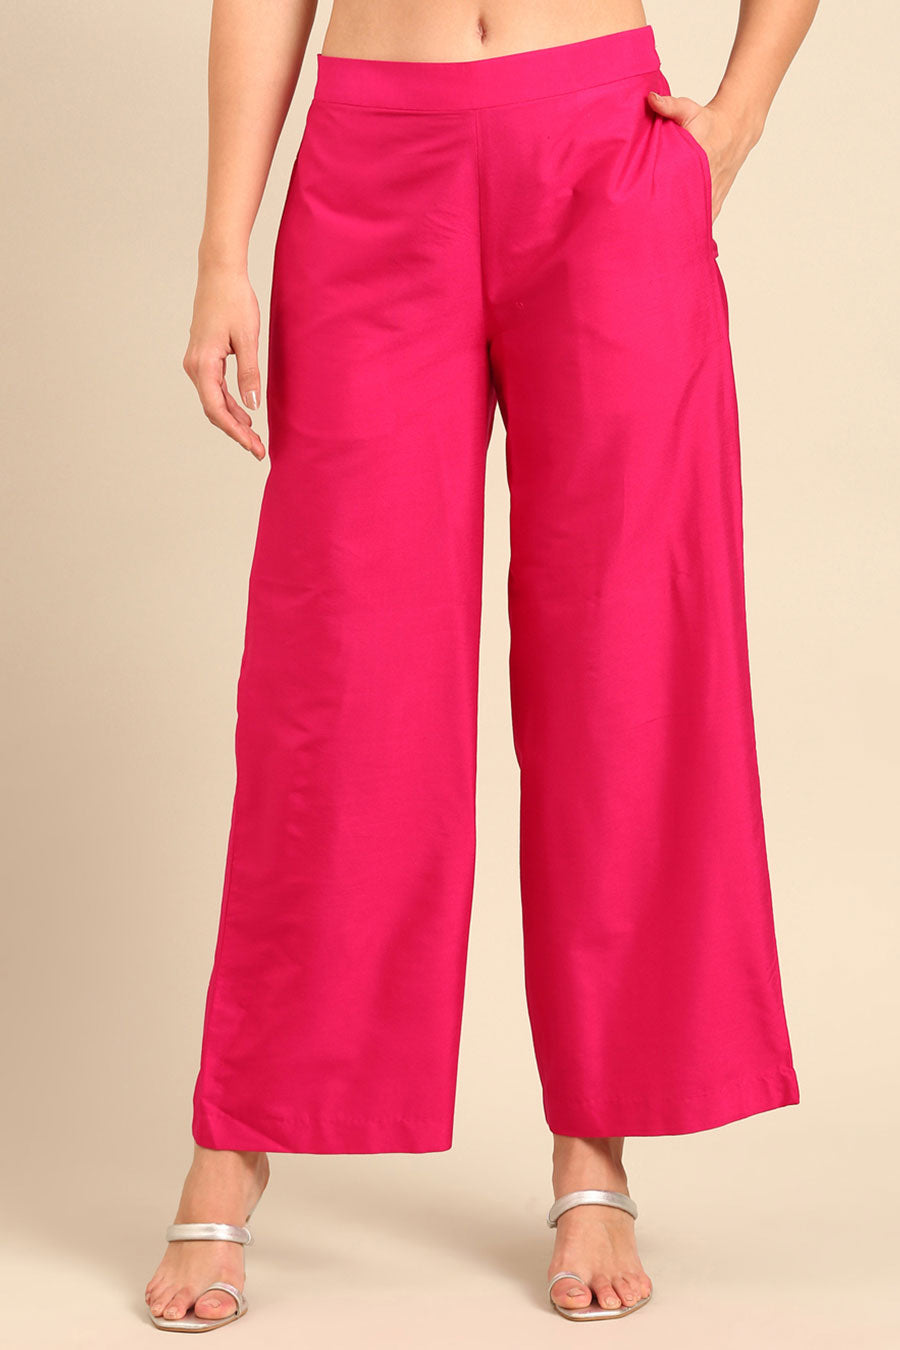 Pink Printed Tunic & Pant Co-Ord Set